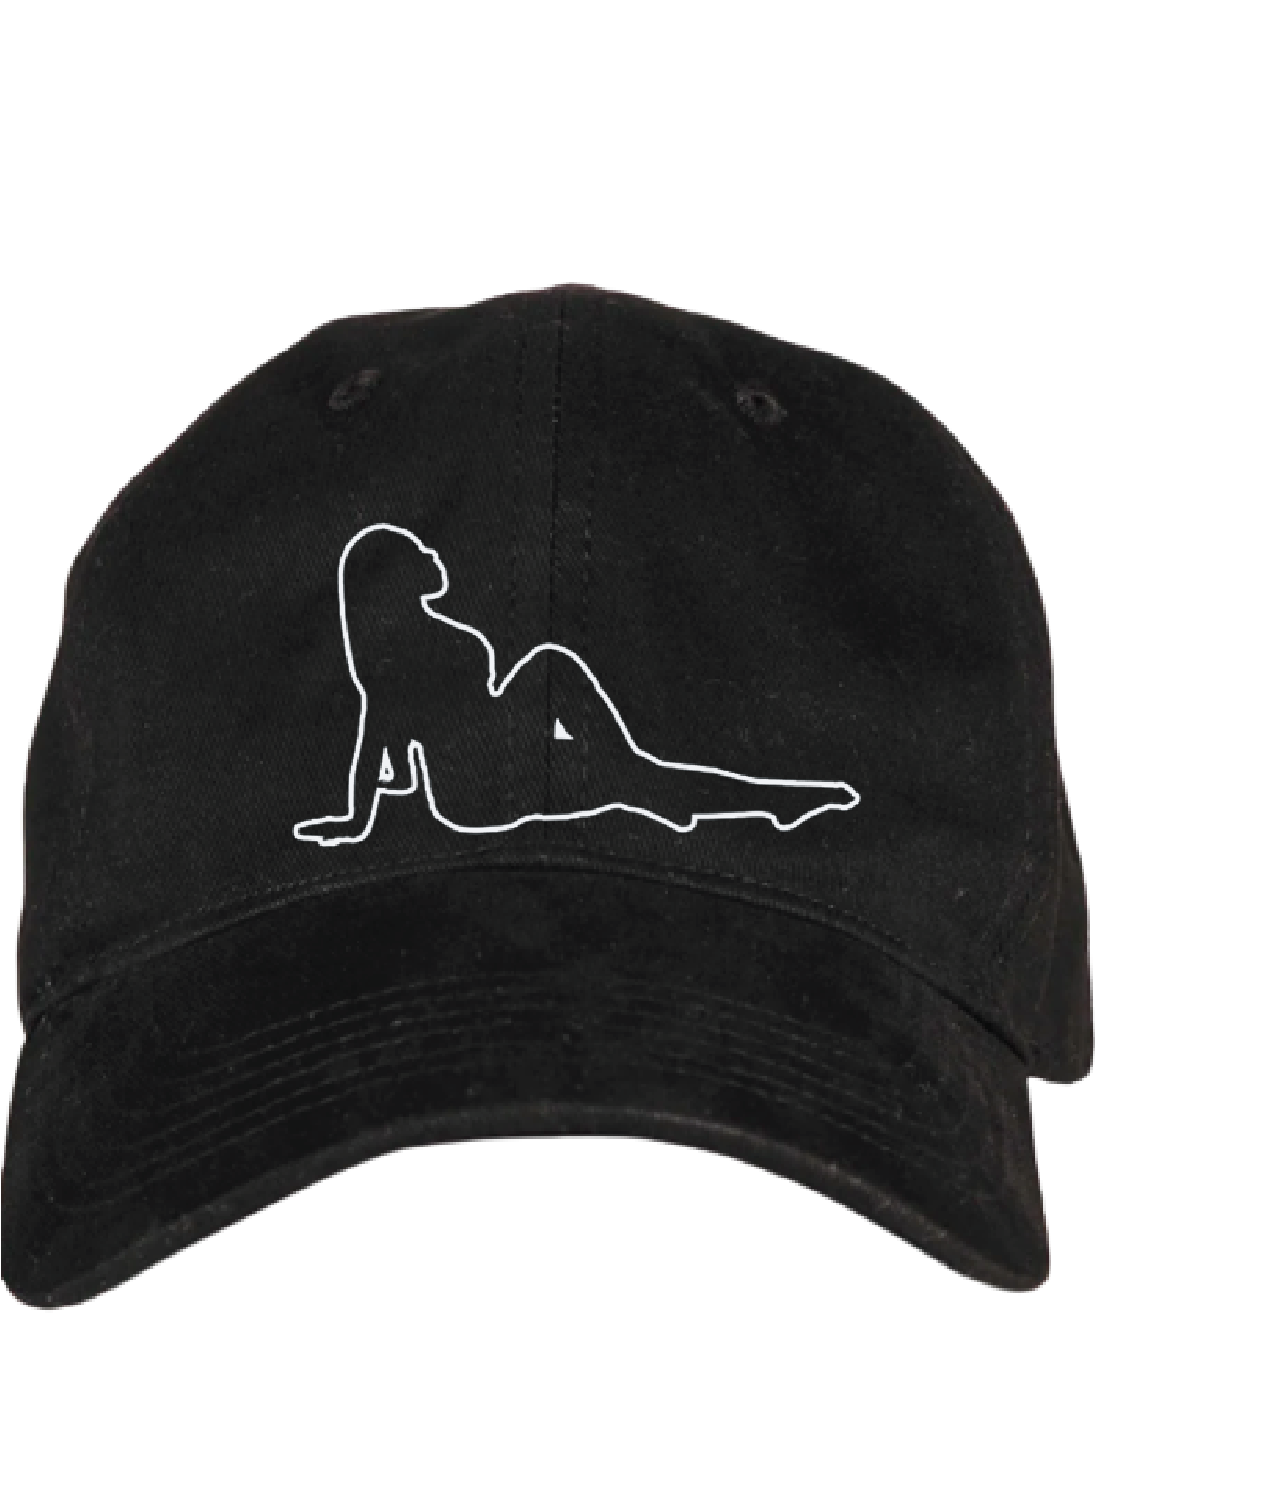 KeepFit Hat - Silhouette